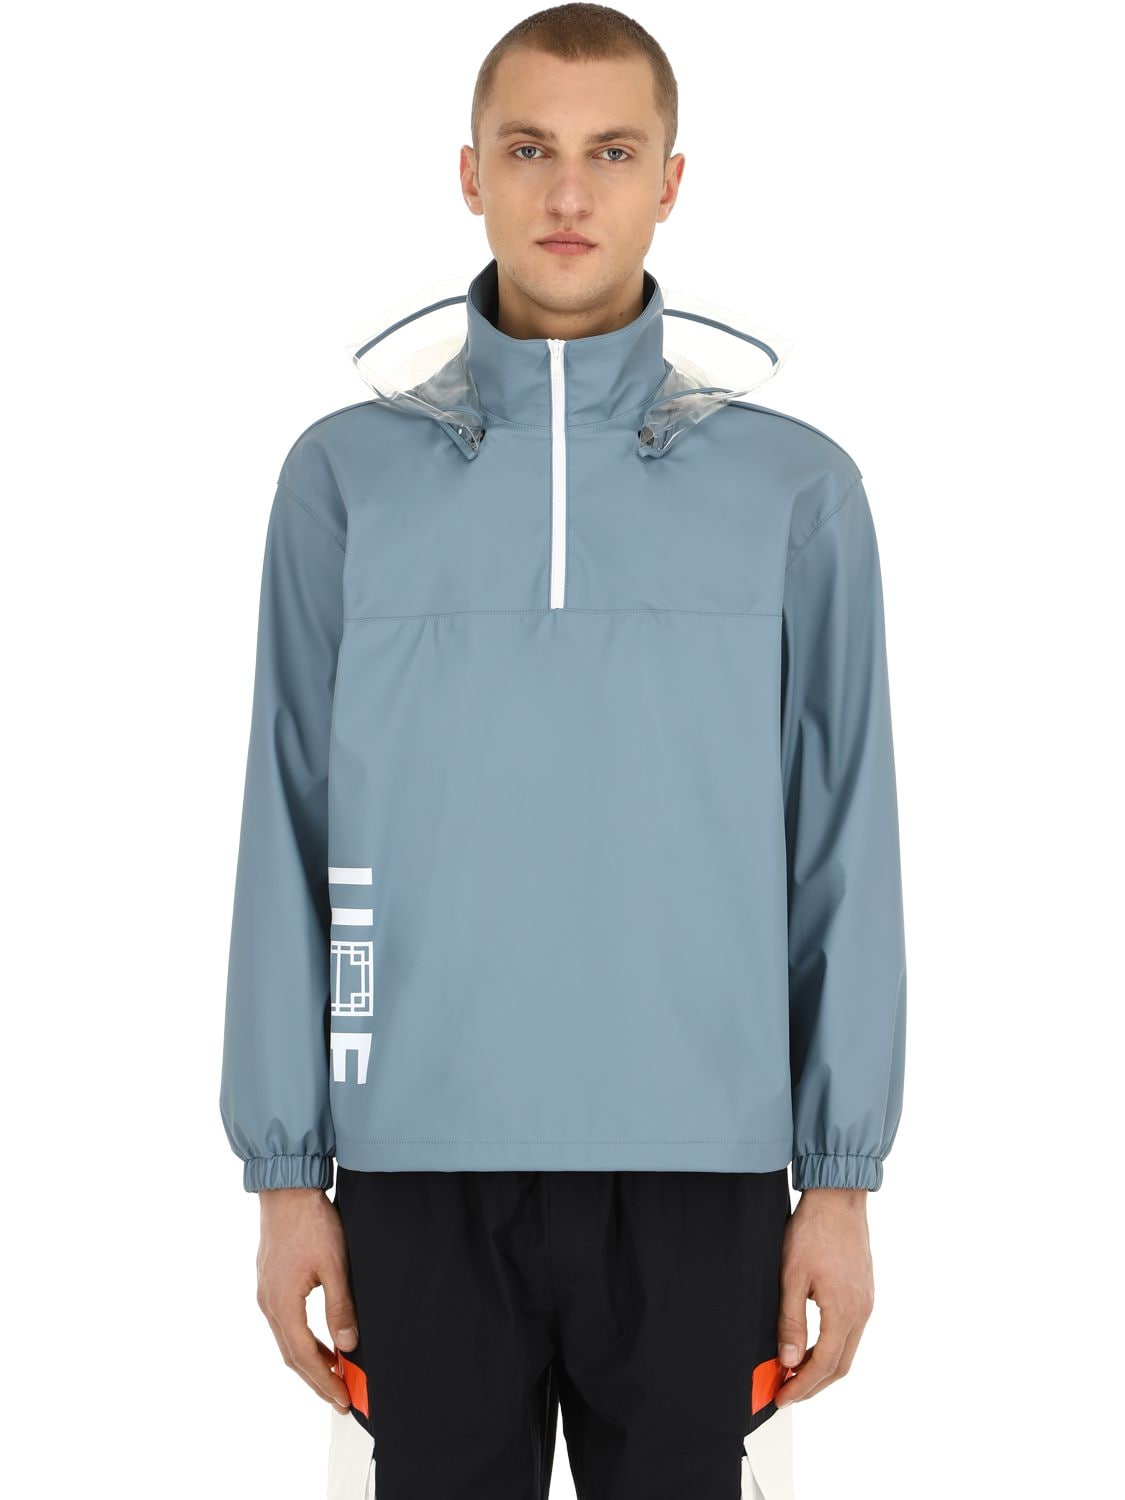 Anorak Rain Jacket W/ Detachable Hood